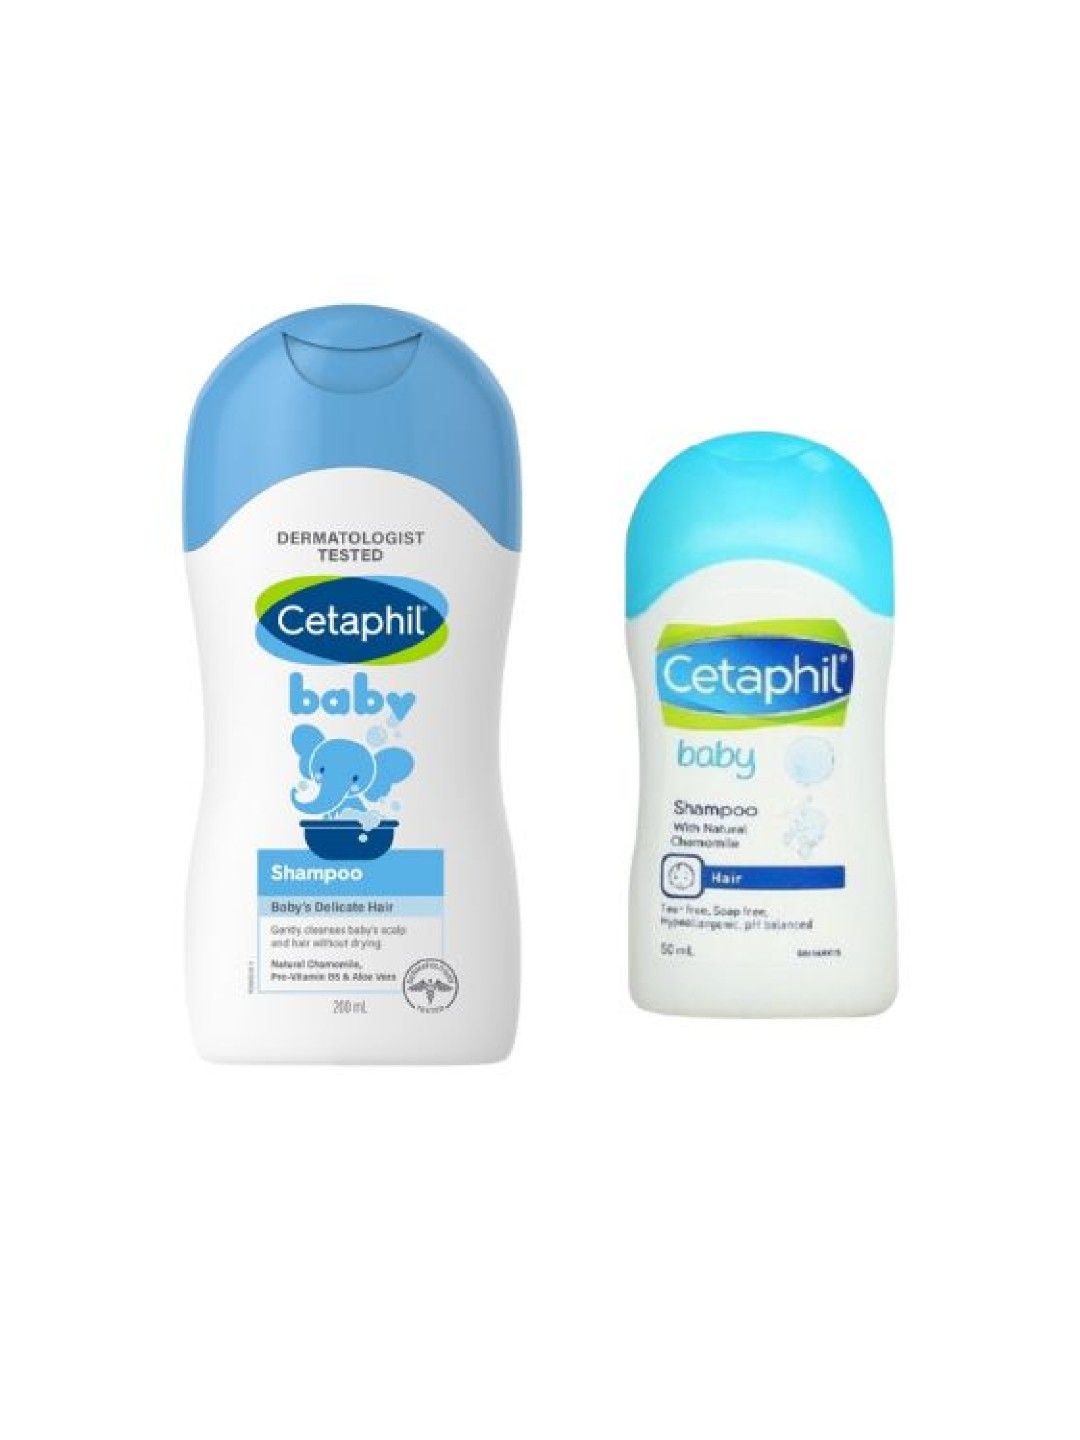 Cetaphil Baby [Buy 1 Get 1] Baby Shampoo (200ml) Get FREE Baby Shampoo (50ml)